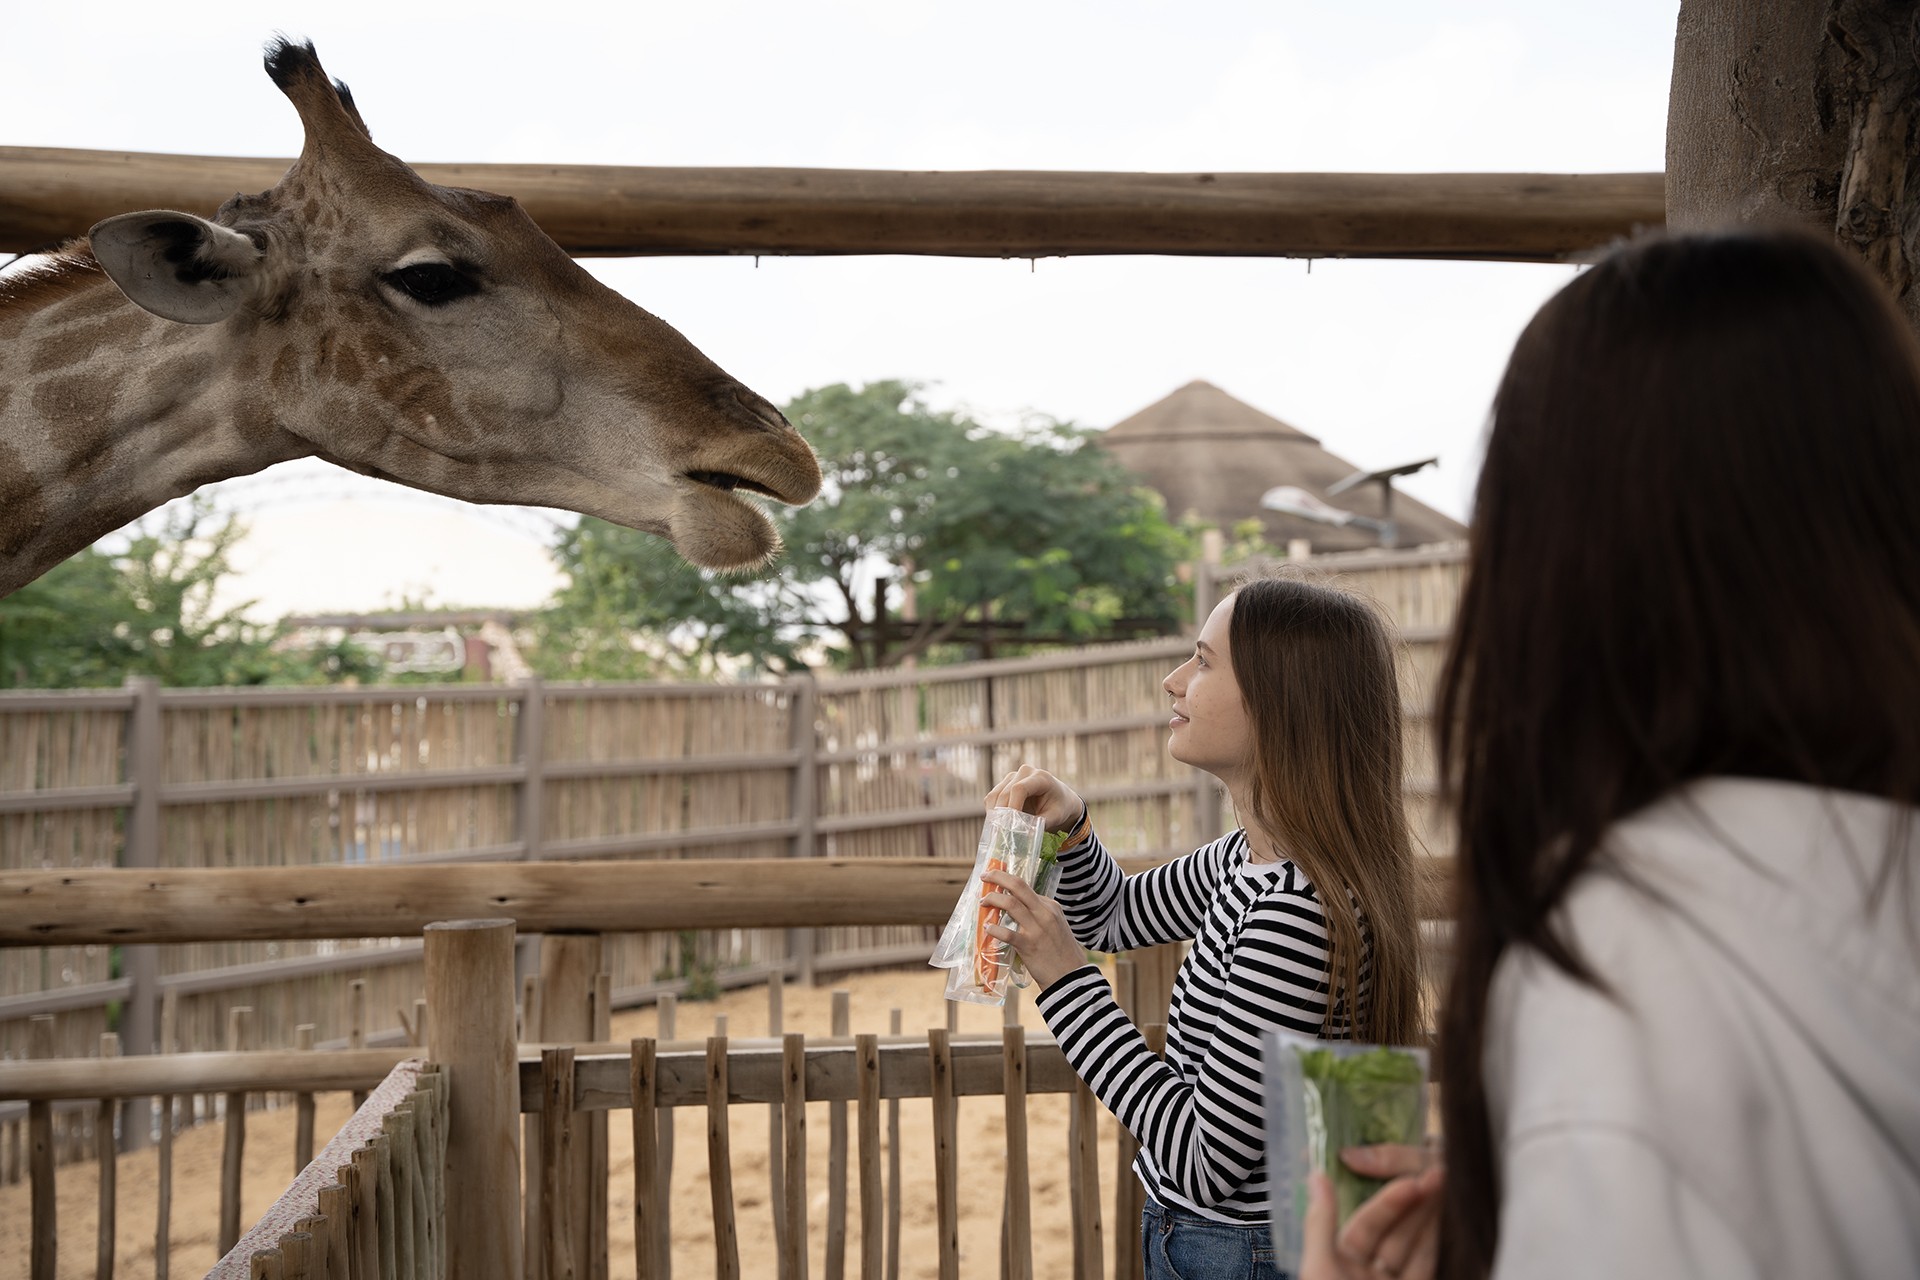 safari park dubai is open